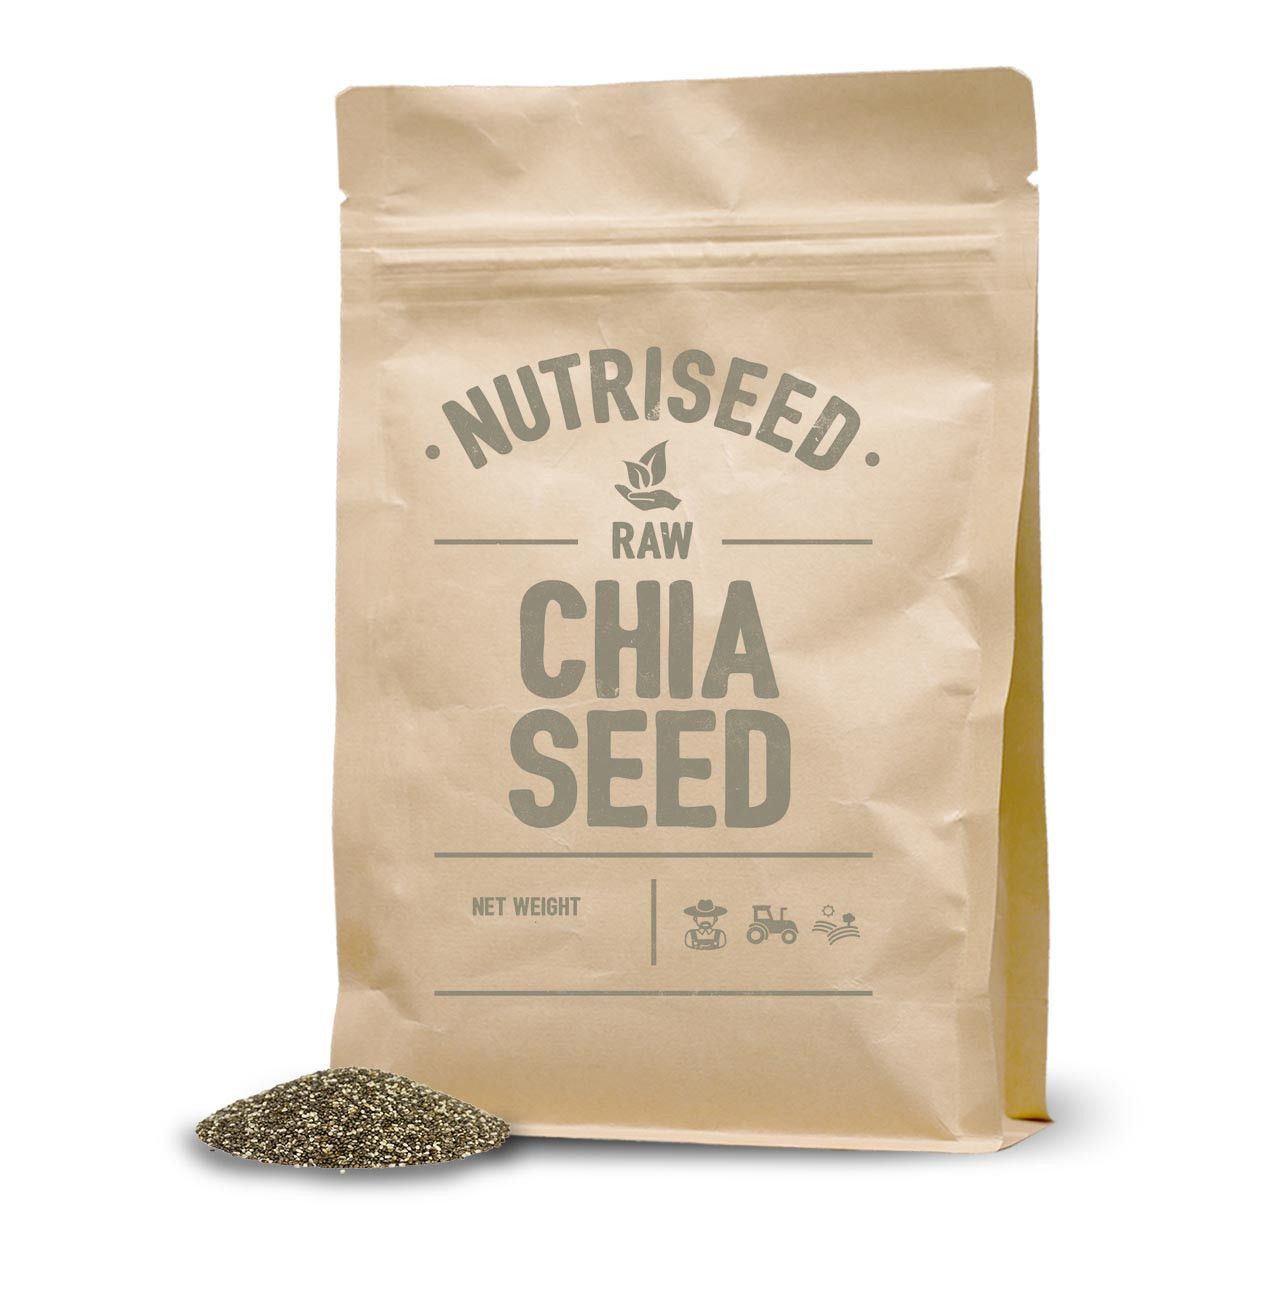 An image of Chia Seeds - 250g Certified Chia, 100% Vegan-Friendly, Gluten Free, Natural Ener...